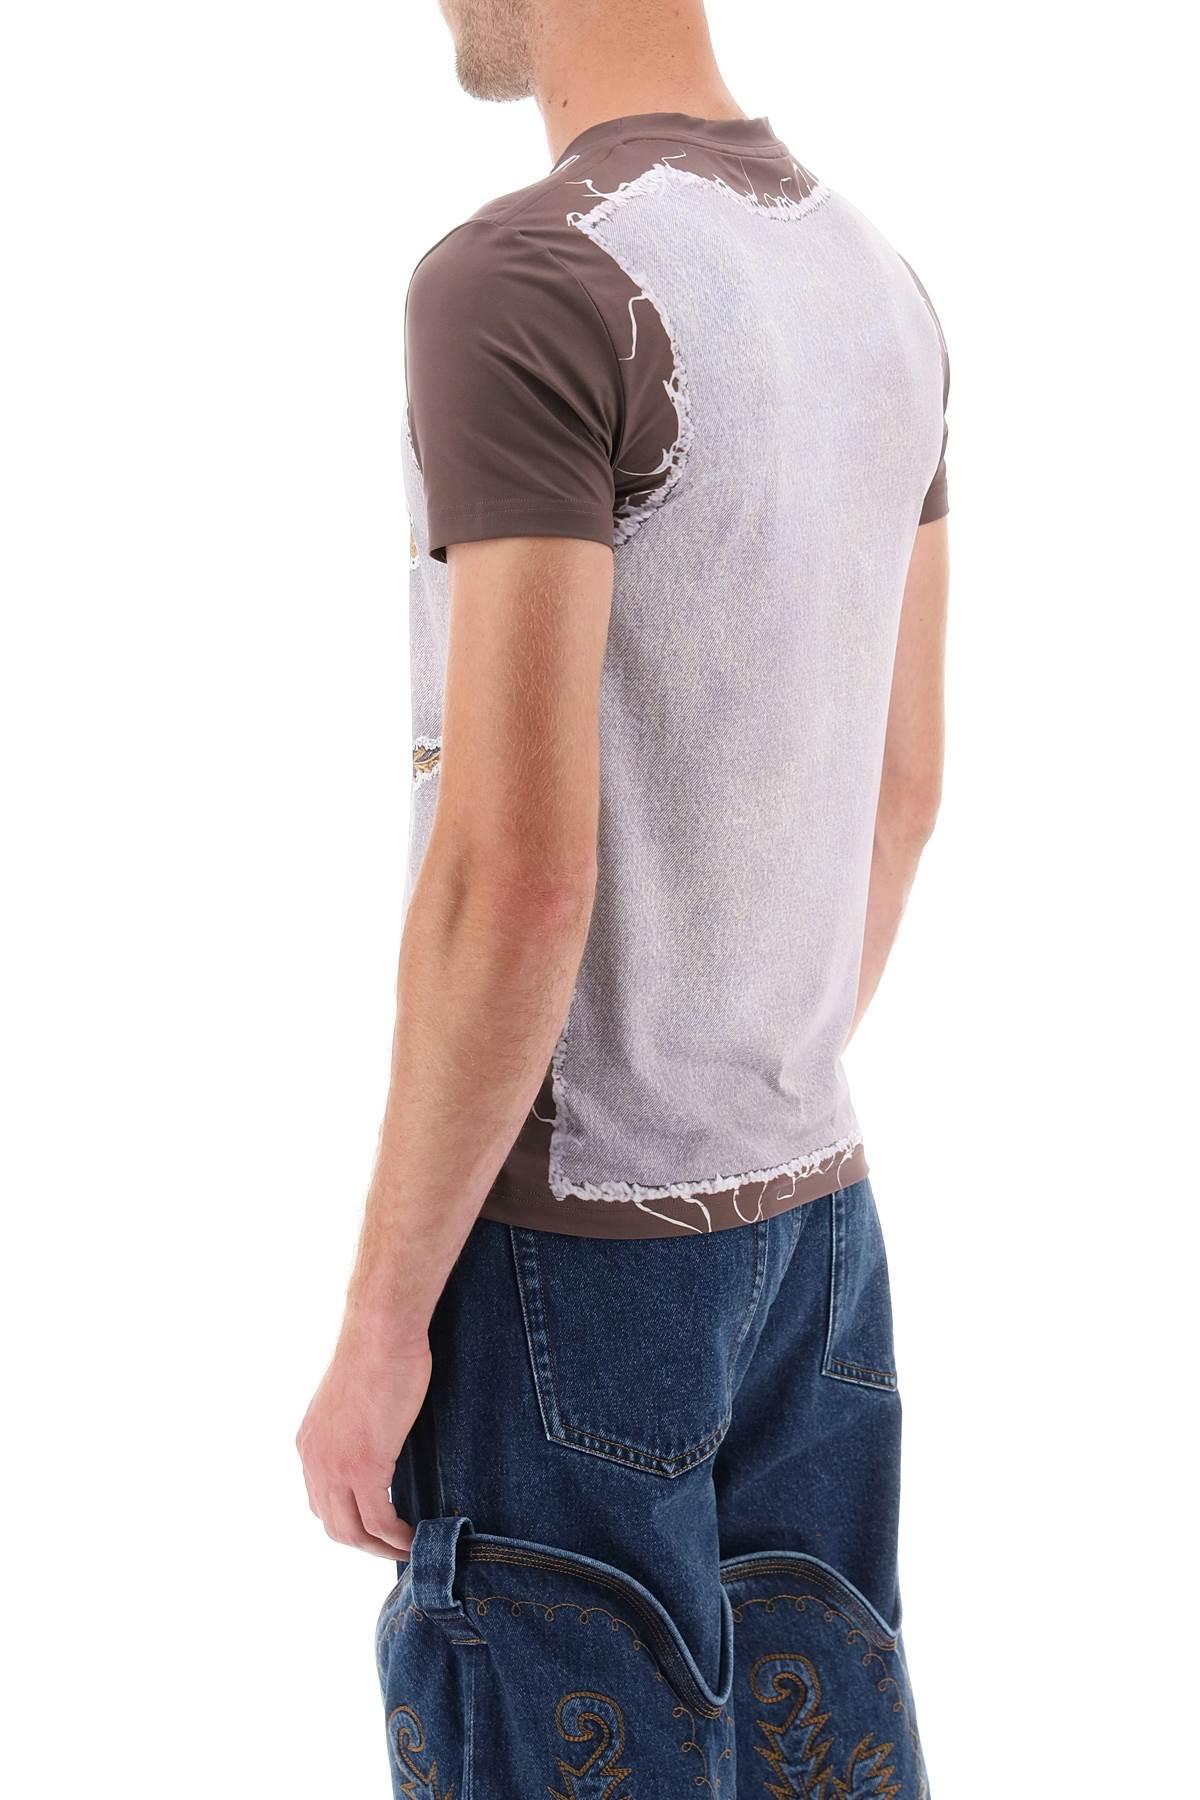 Y/PROJECT Trompe Loeil Tシャツ M - Tシャツ/カットソー(半袖/袖なし)